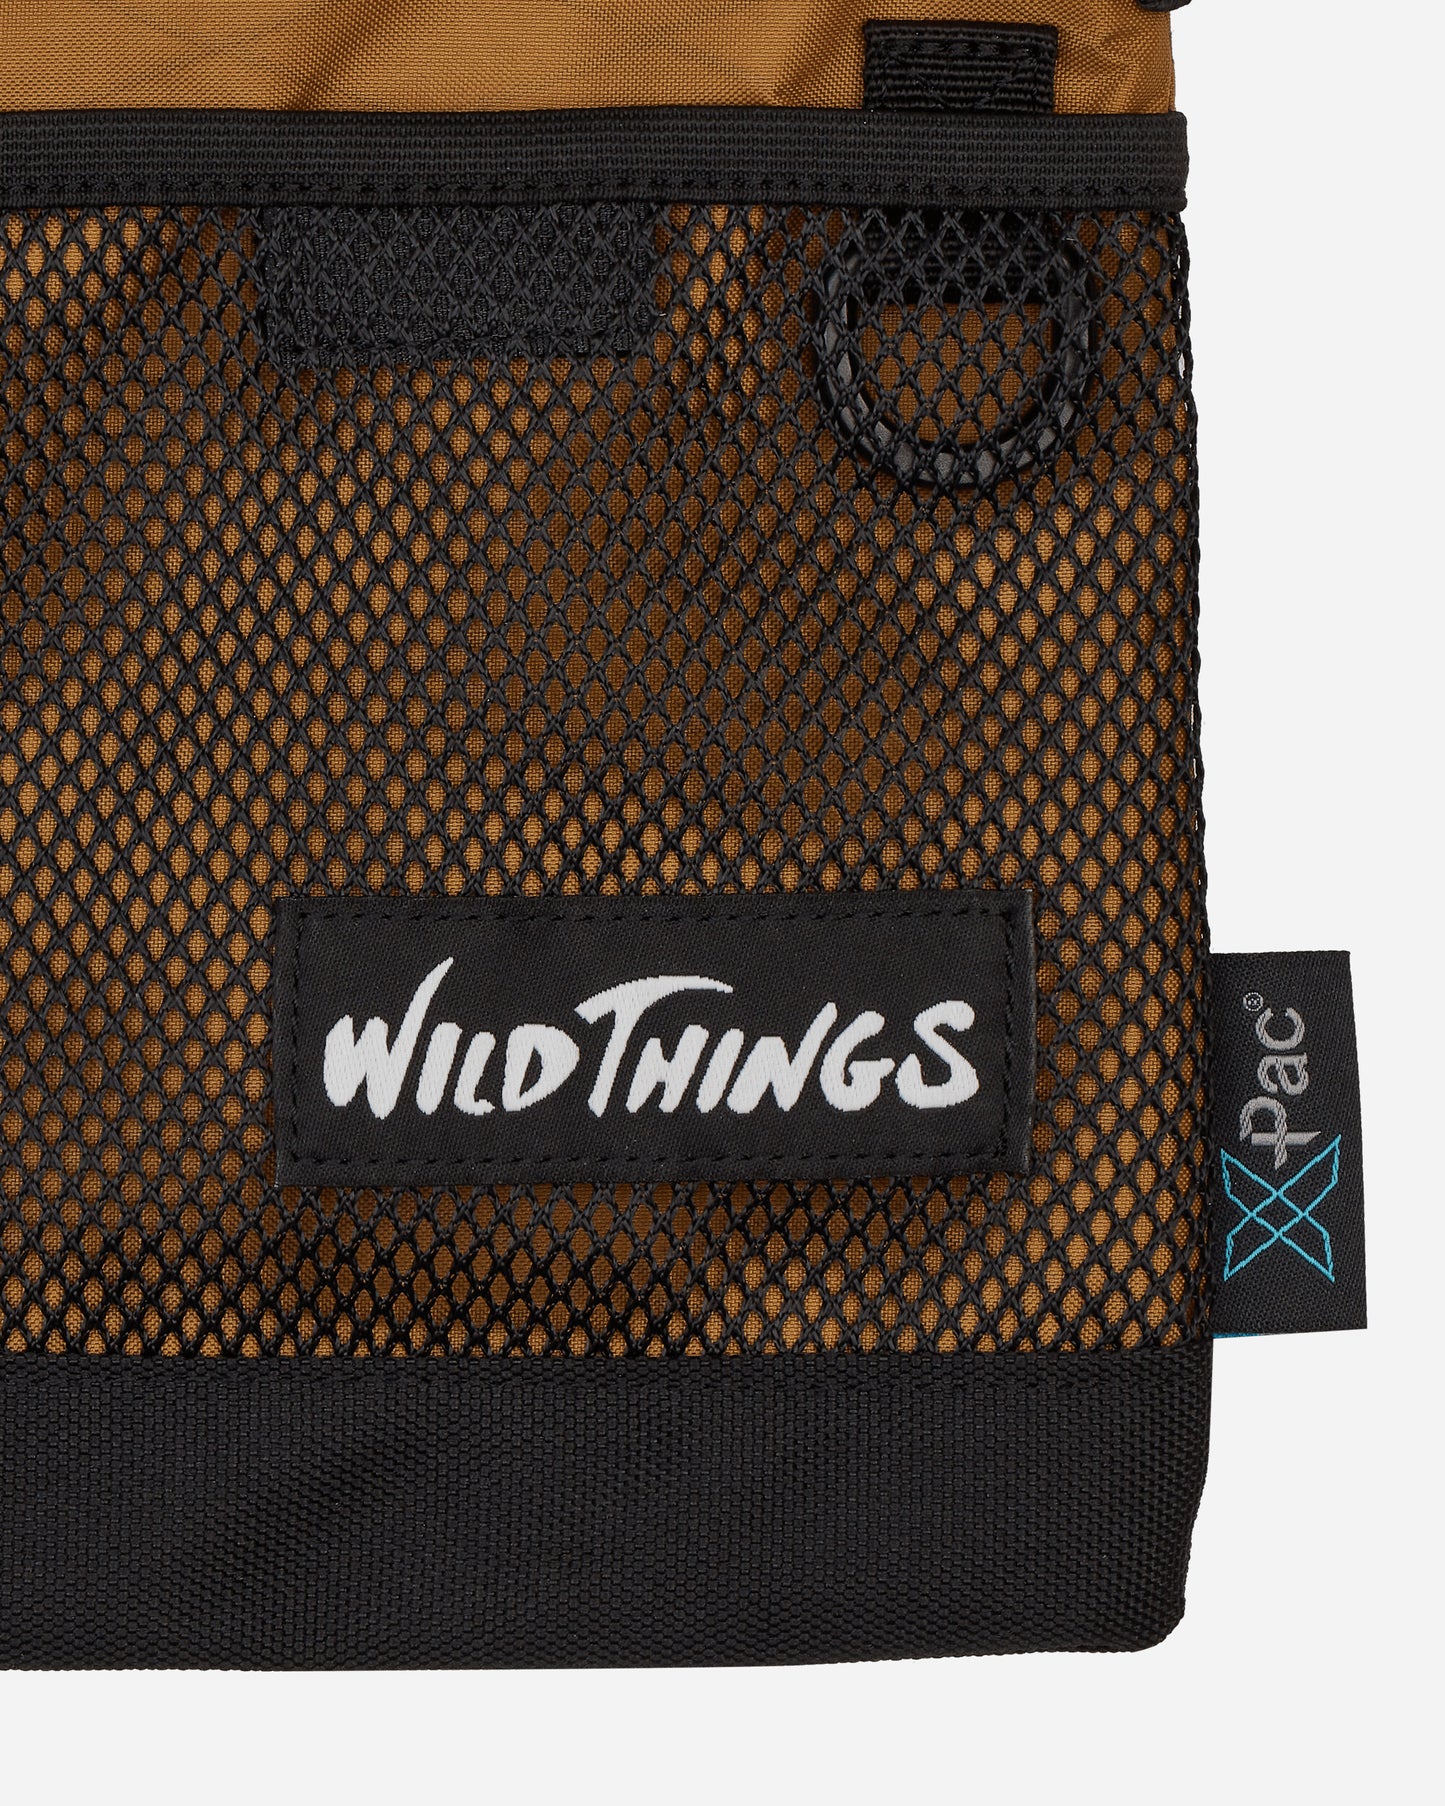 Wild Things New X-Pac Sachosh Beige Bags and Backpacks Shoulder Bags WT232-28 BEIGE